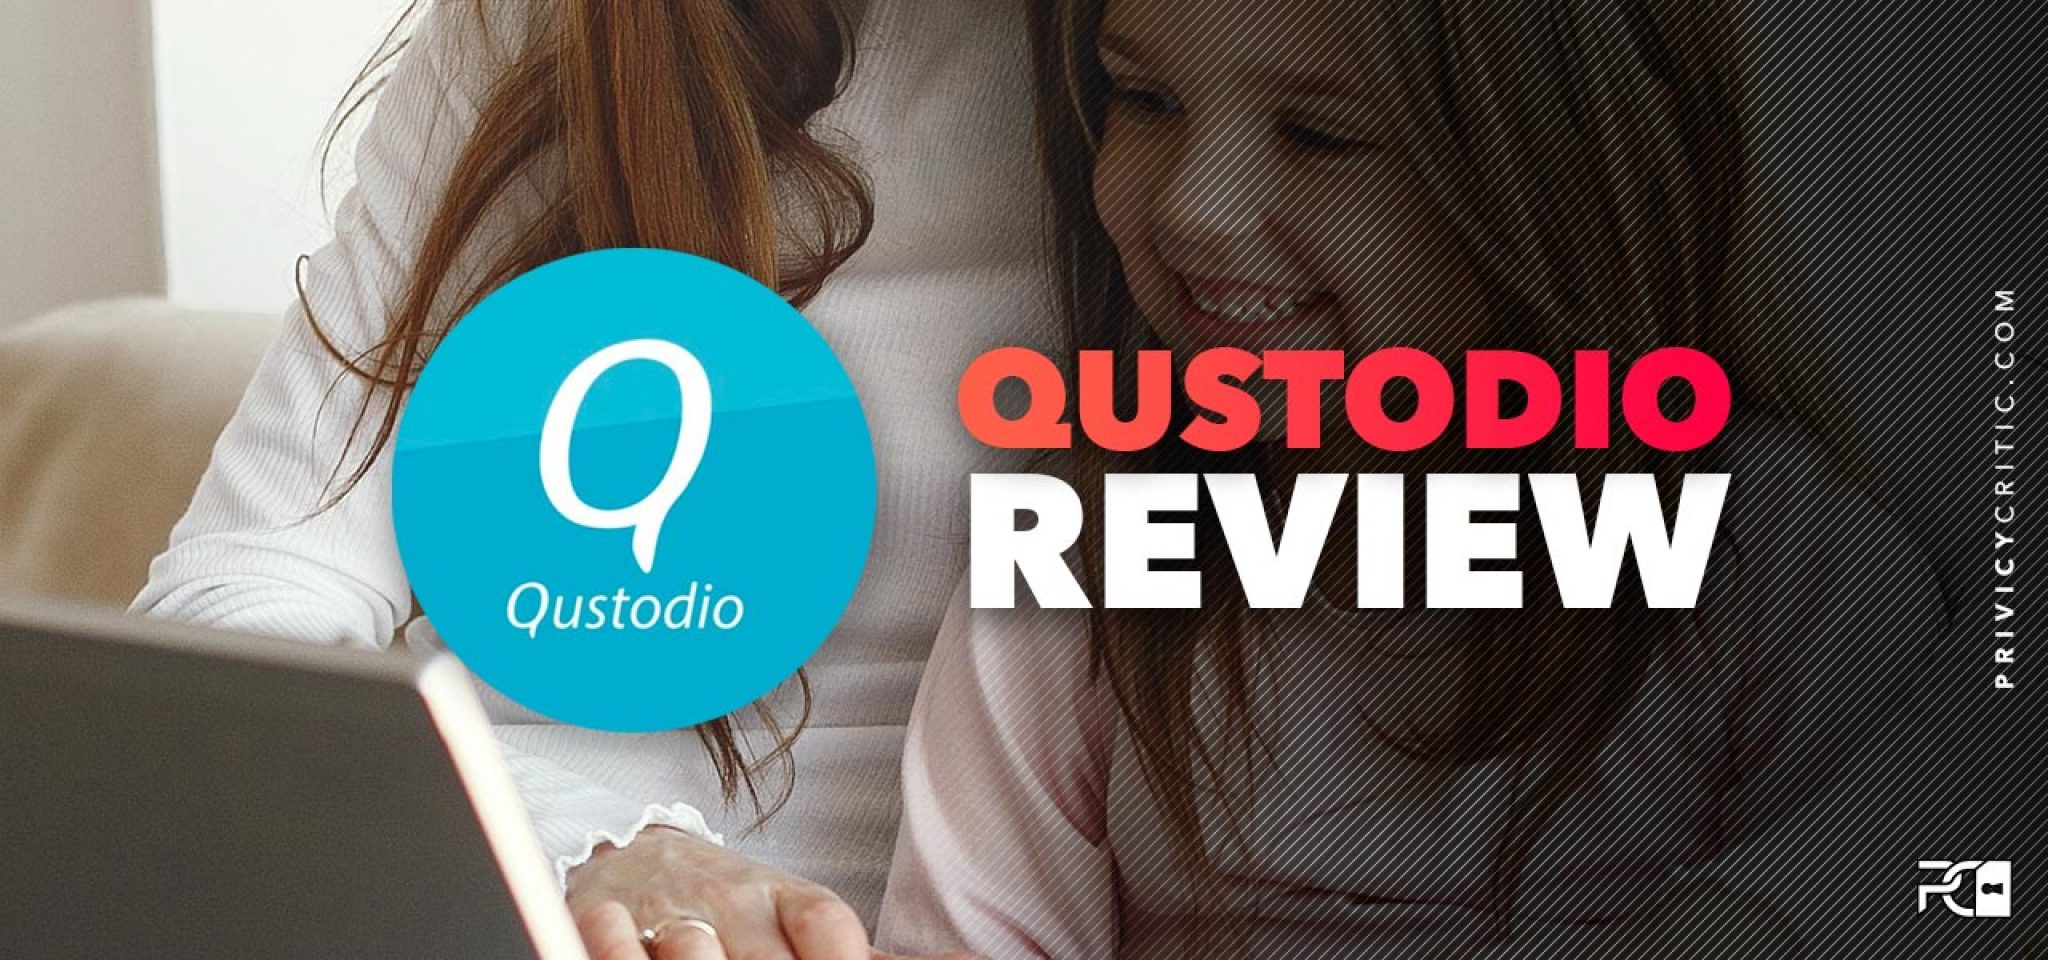 qustodio customer service number